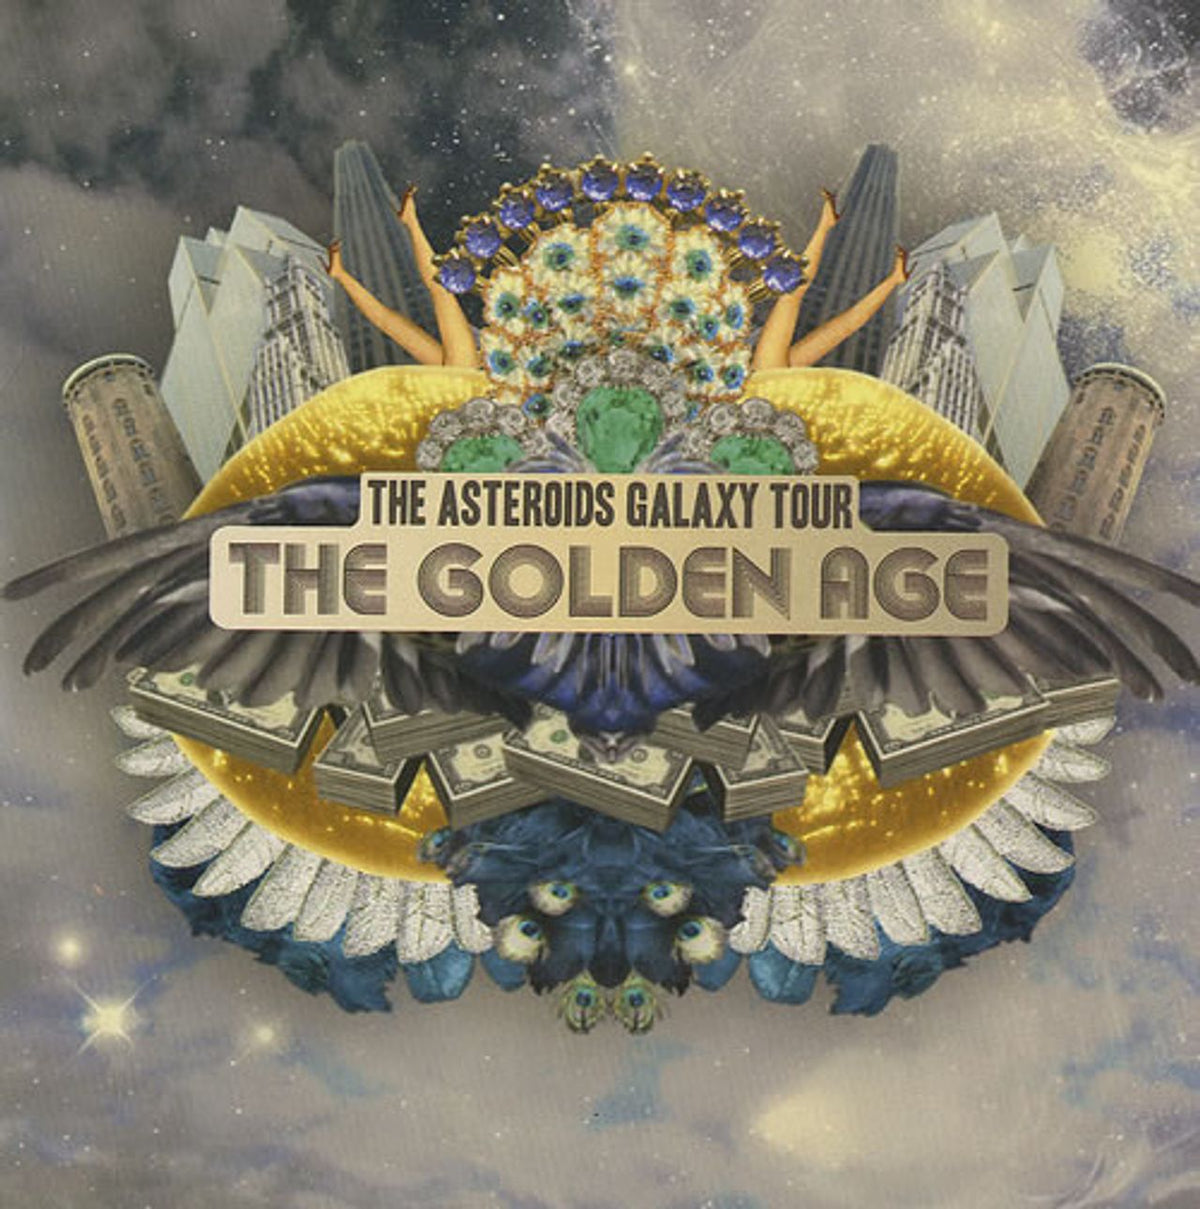 The Asteroids Galaxy Tour The Golden Age Promo CD single — RareVinyl.com